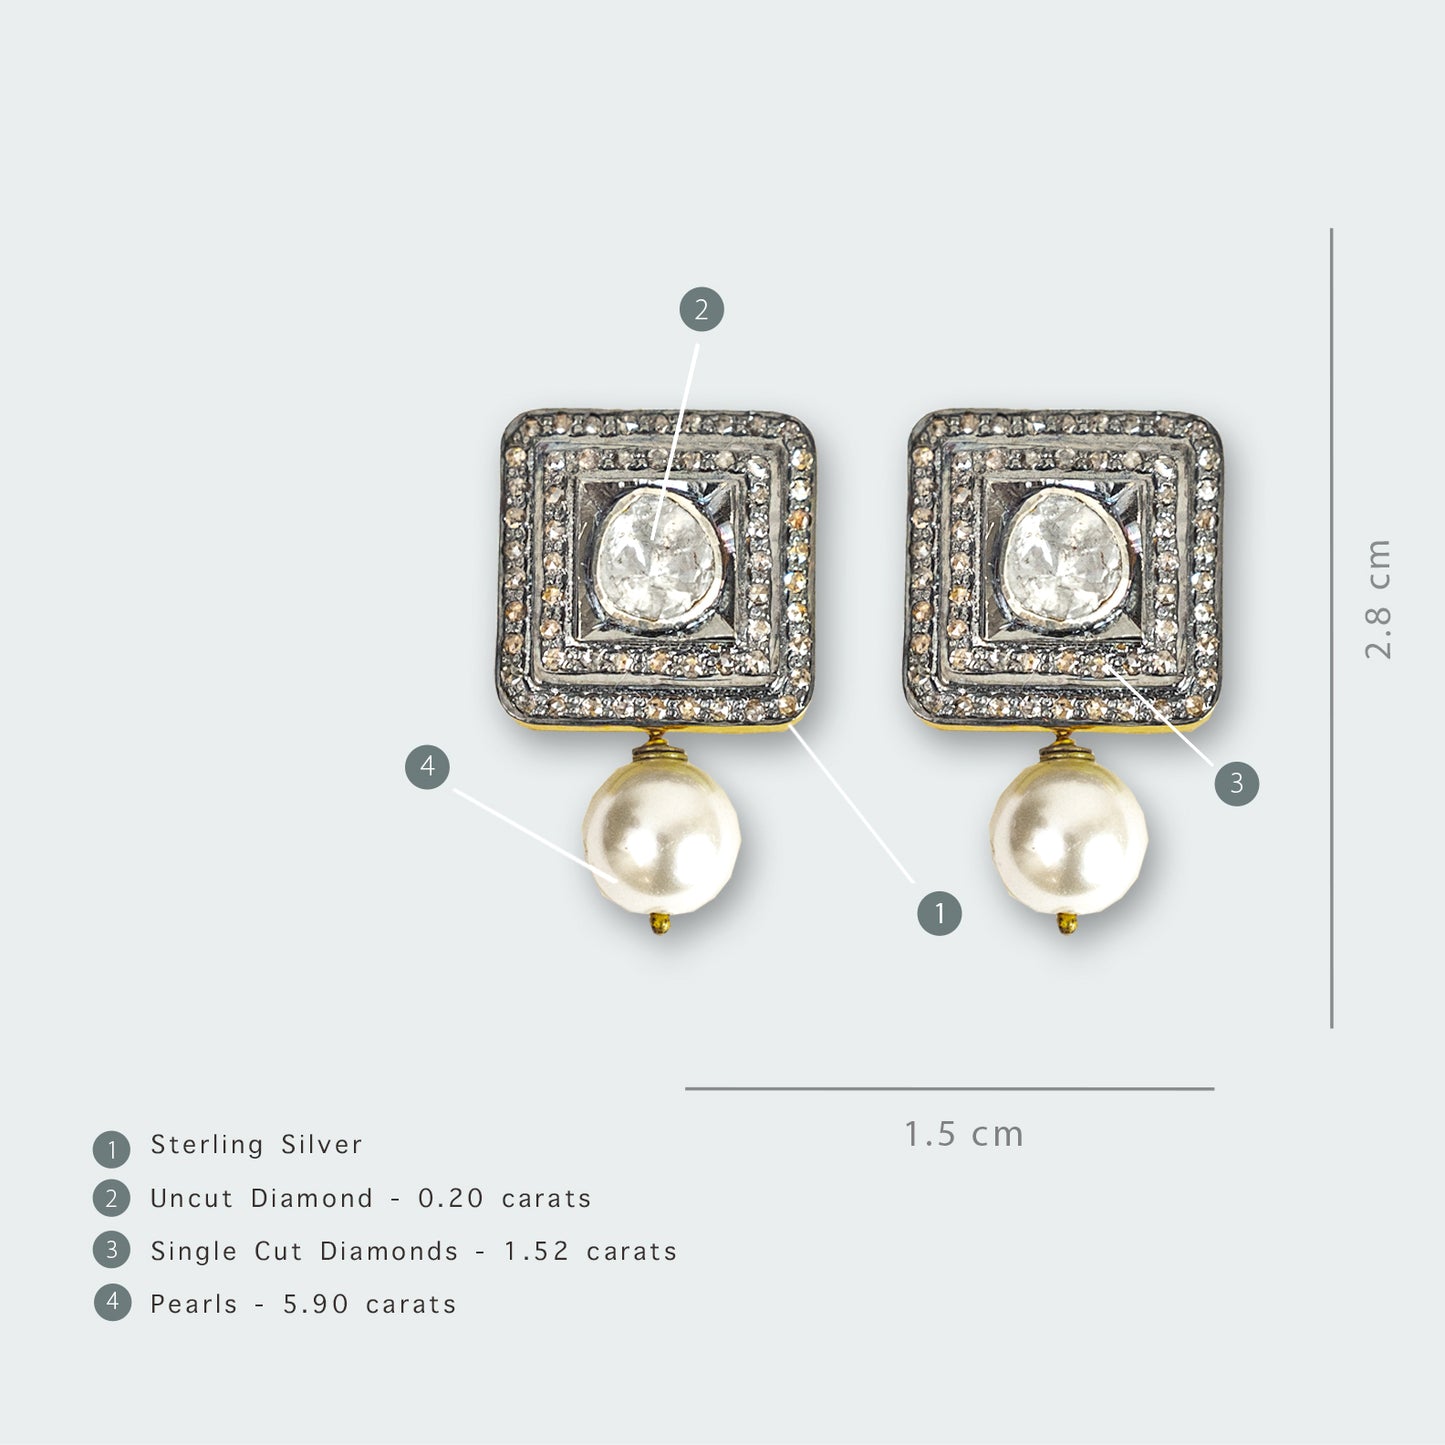 Dual Diamond Square Uncut Diamond Earrings